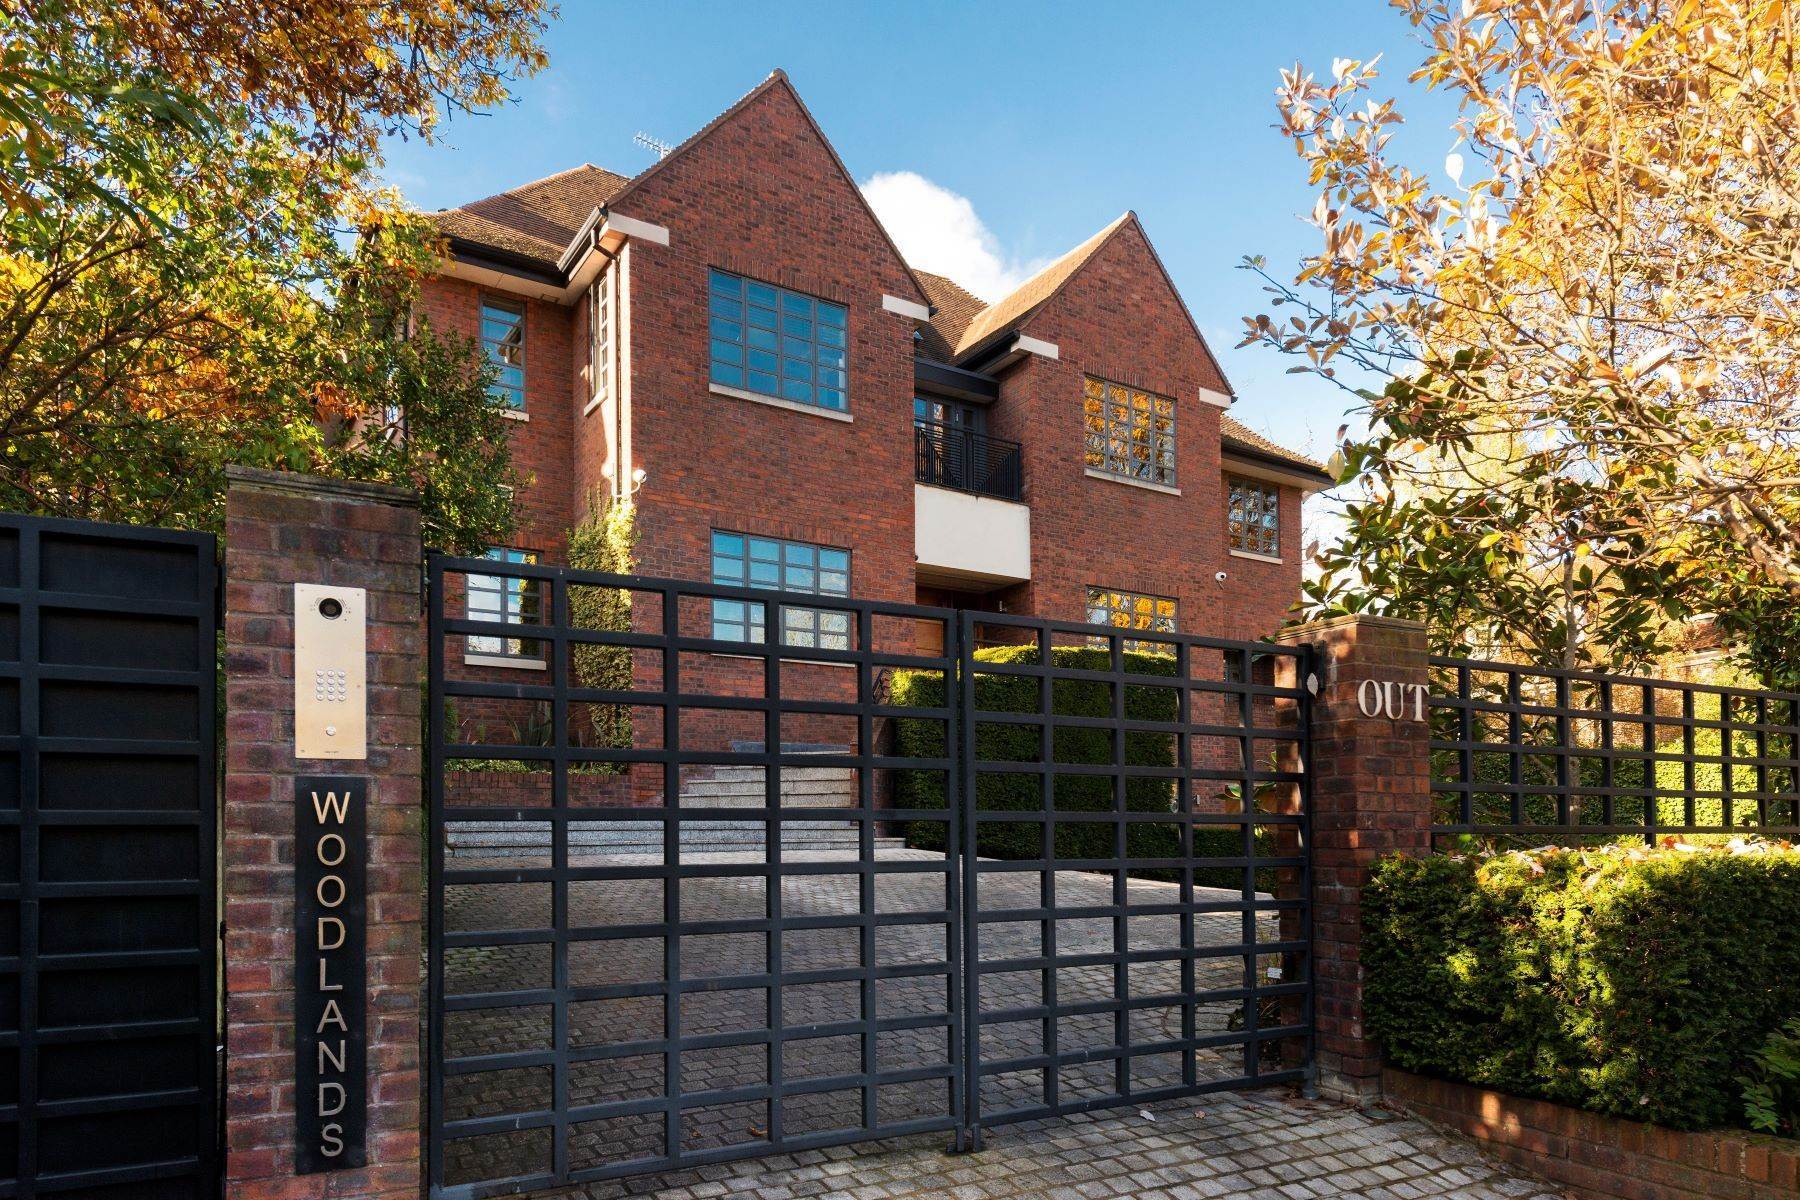 Single Family Homes for Sale at Woodlands, Courtenay Avenue, London, N6 London, England N6 4LR United Kingdom